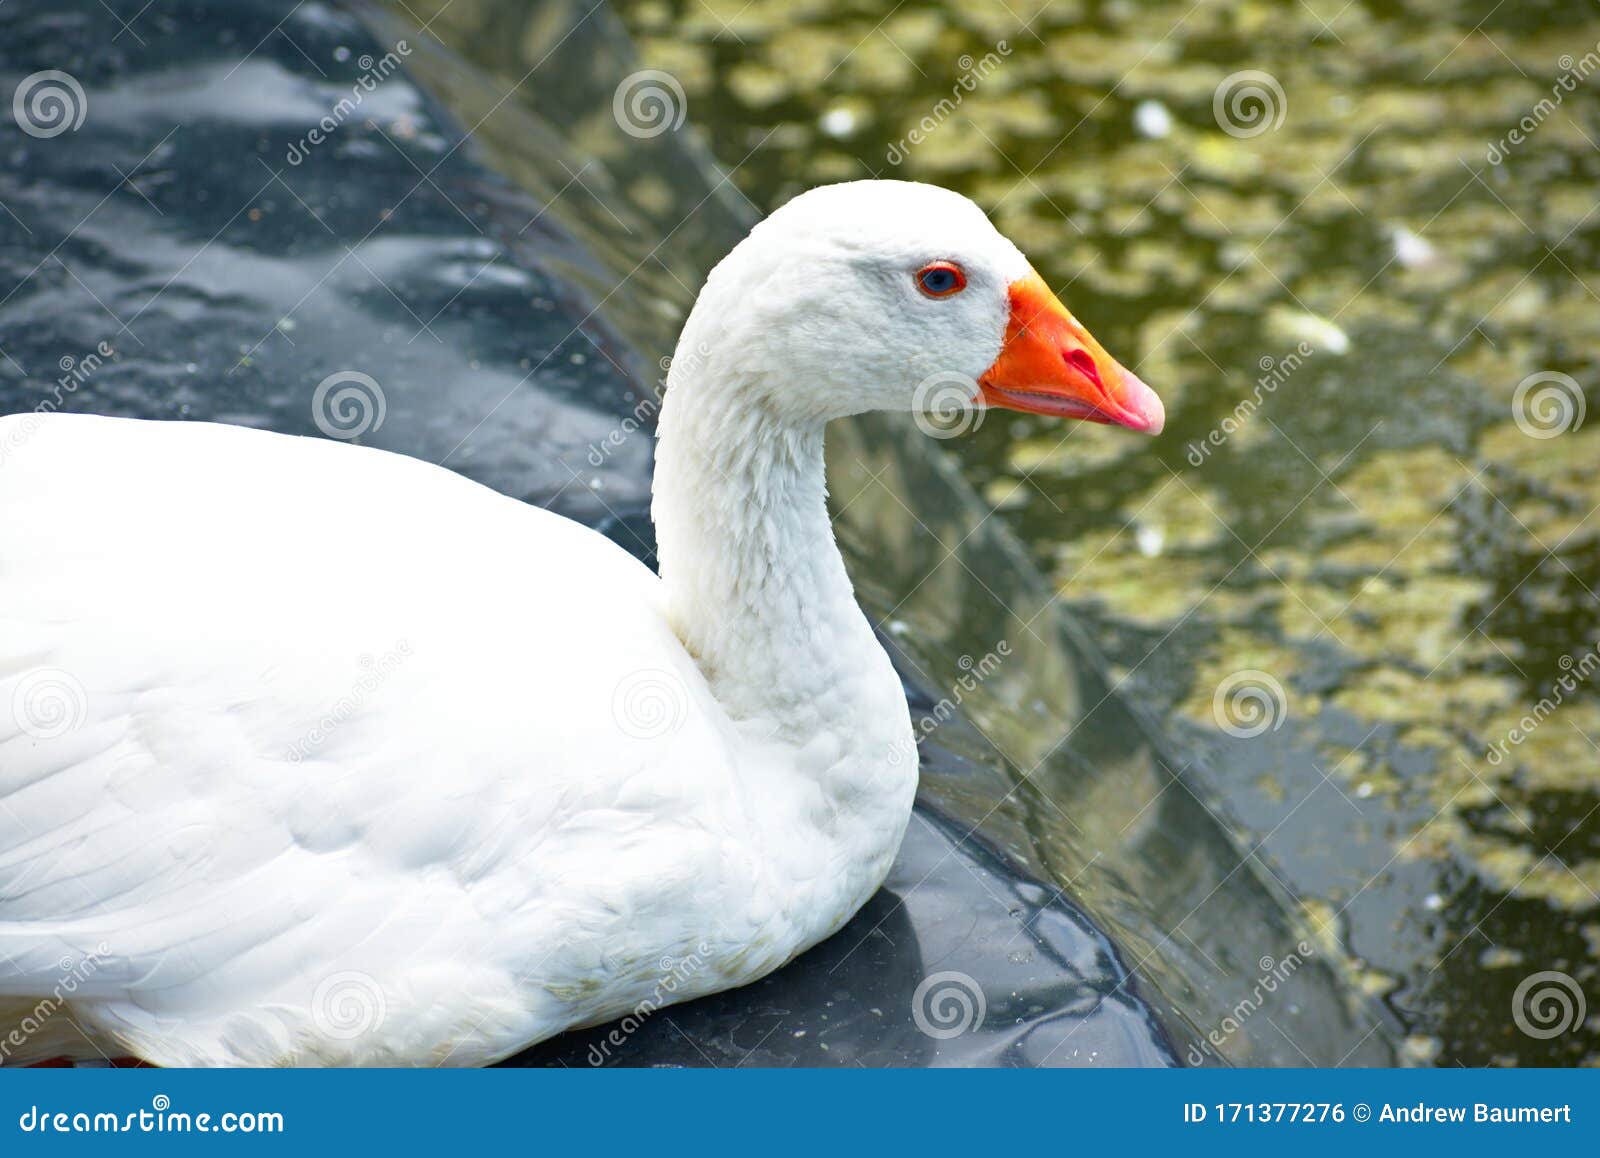 white goose sitting near a pond in barranco miraflores lima peru